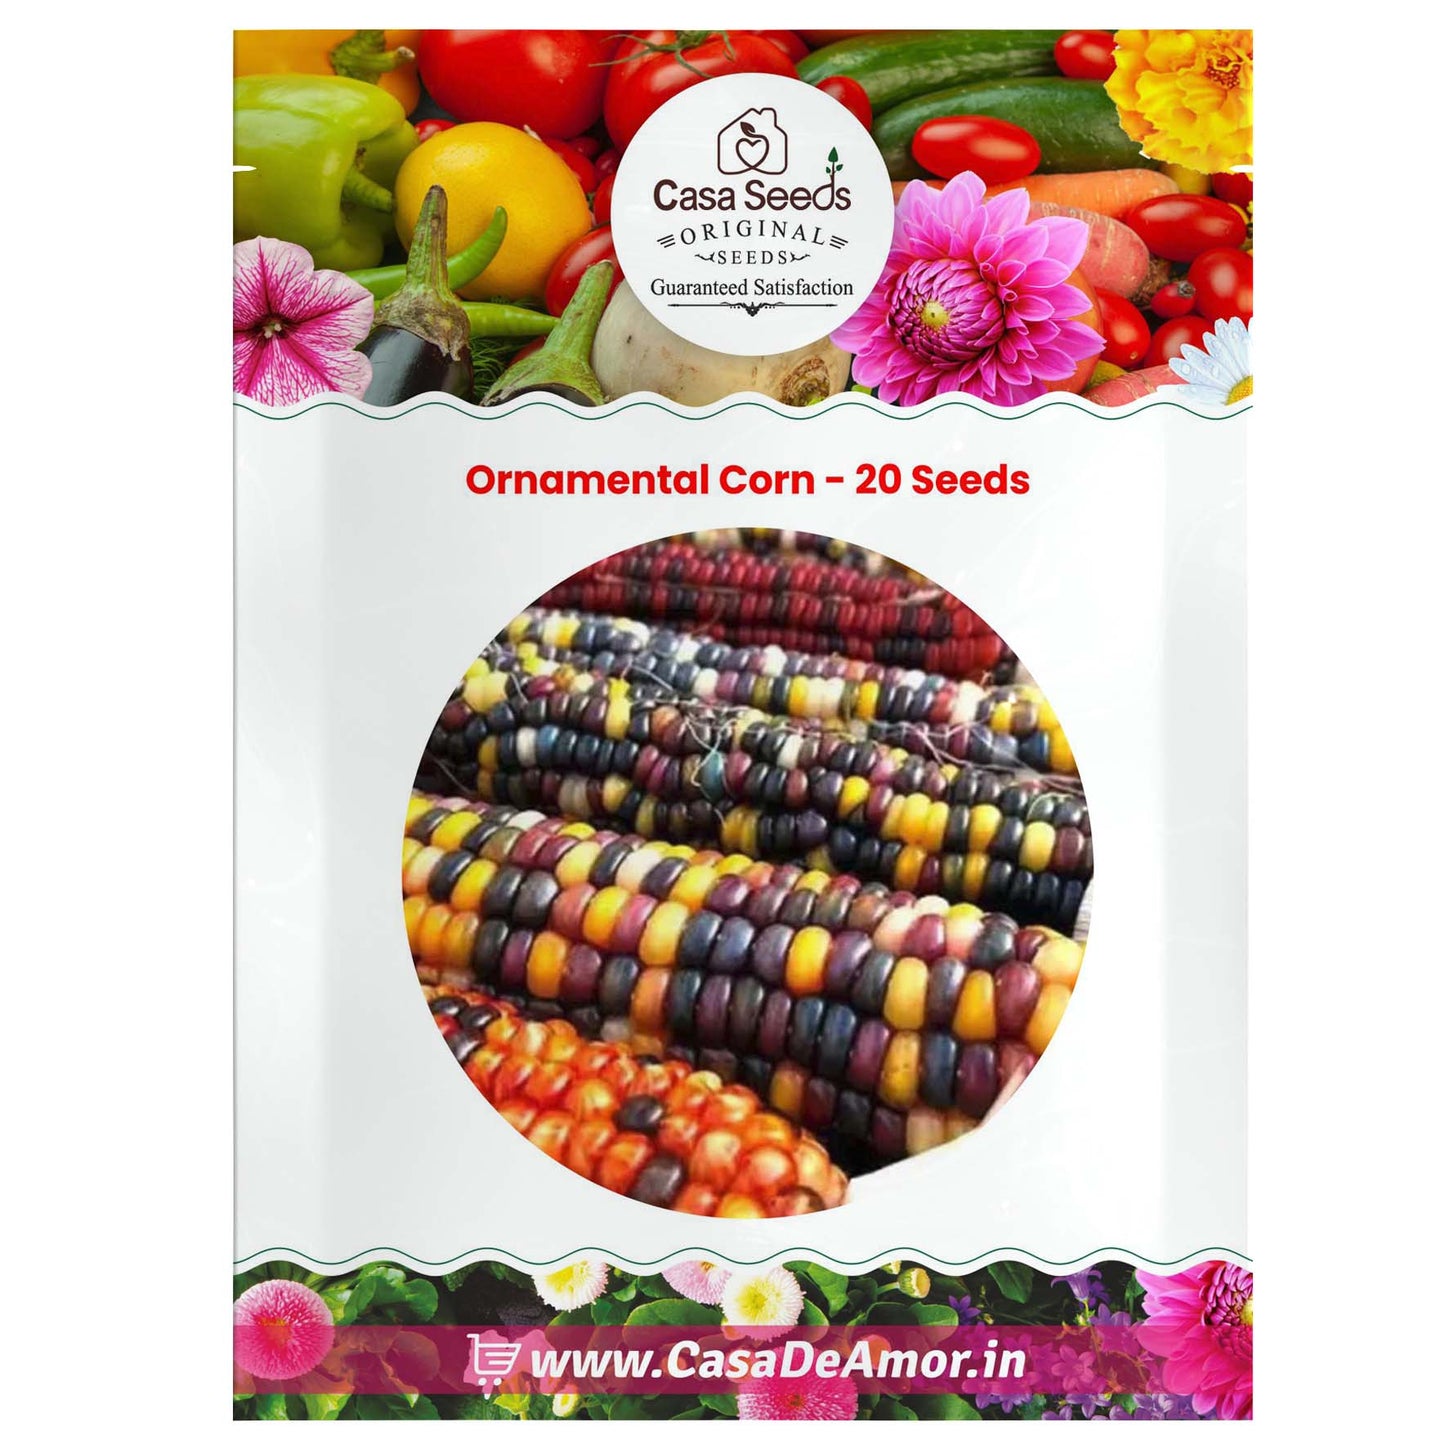 Ornamental Corn - 20 Seeds